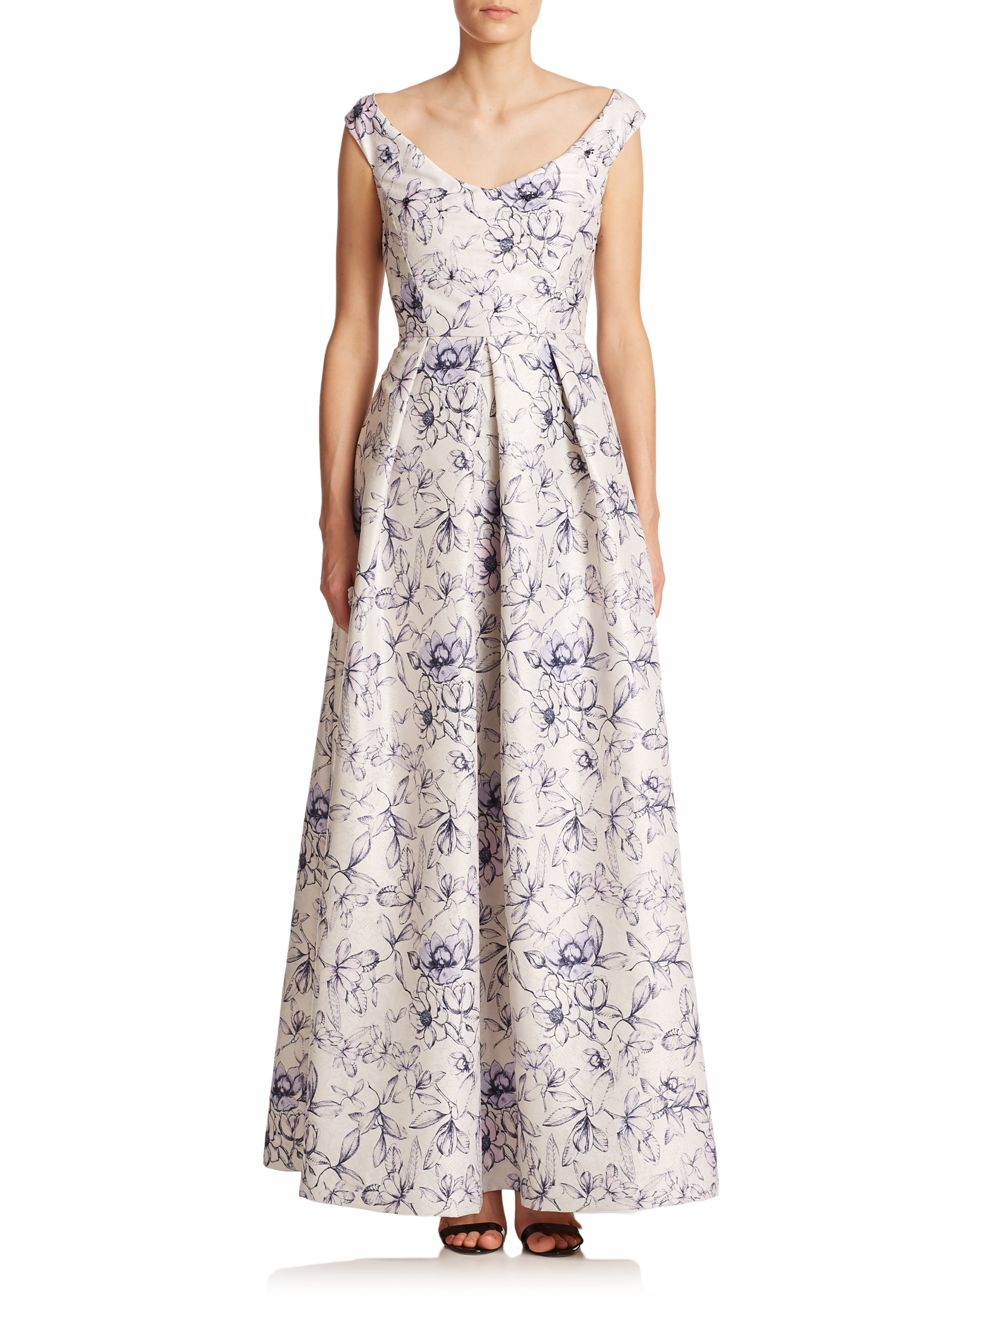 Lilac Off Shoulder Dress - Make Your Evening Special